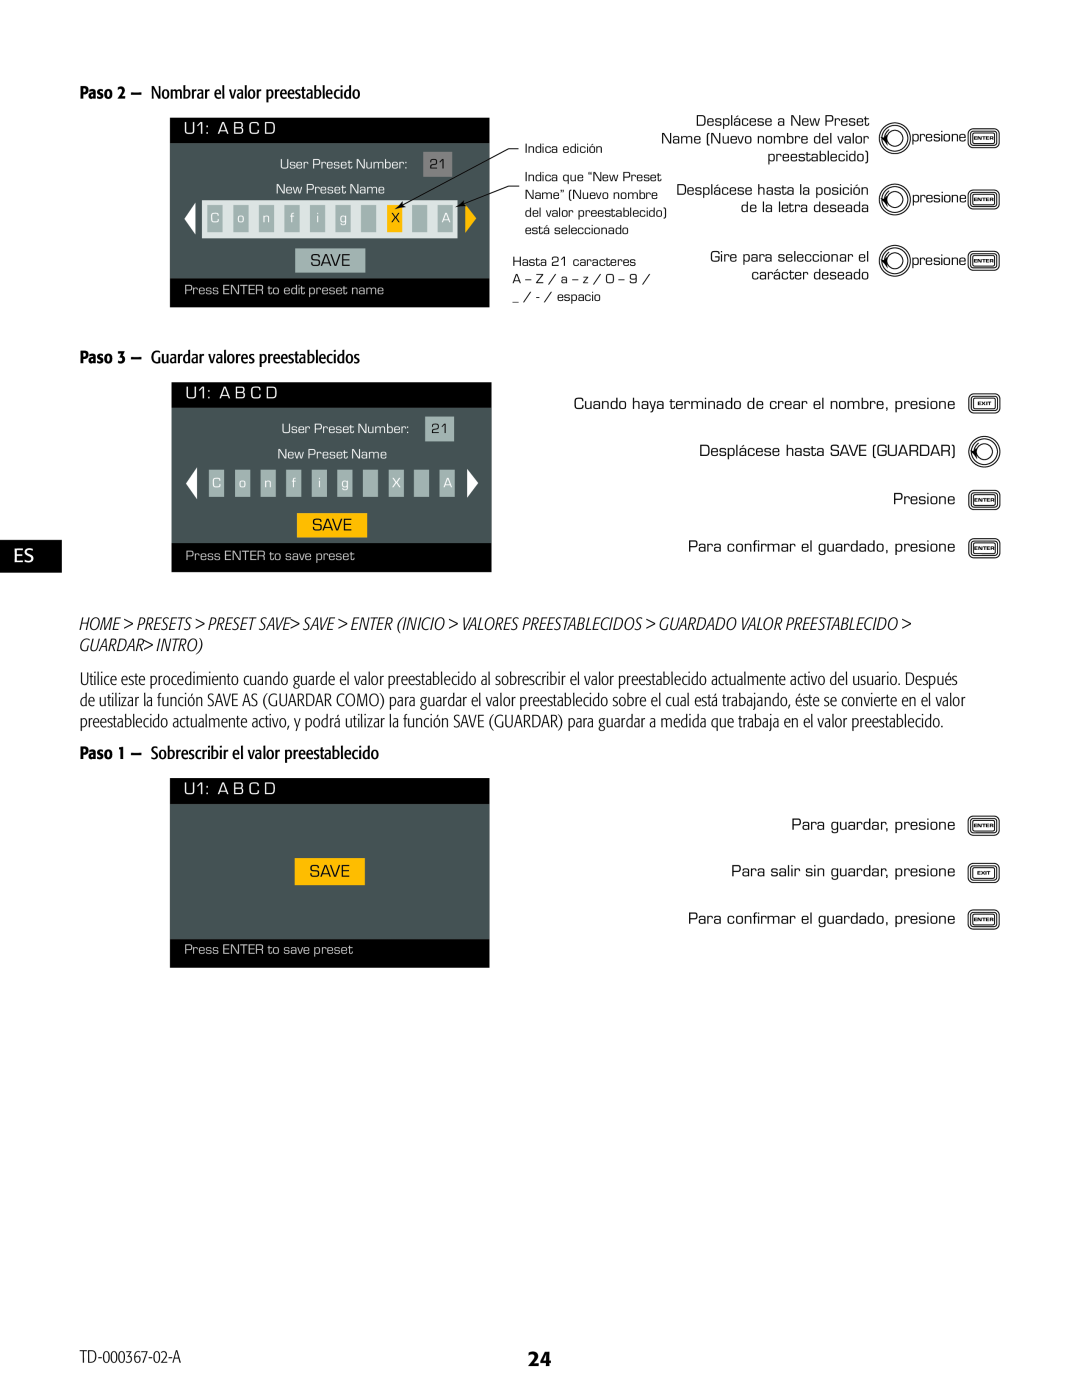 QSC Audio CXD4.2, CXD4.5, CXD4.3 manual U1 A B C D, Save, Press ENTER to edit preset name, Press ENTER to save preset 